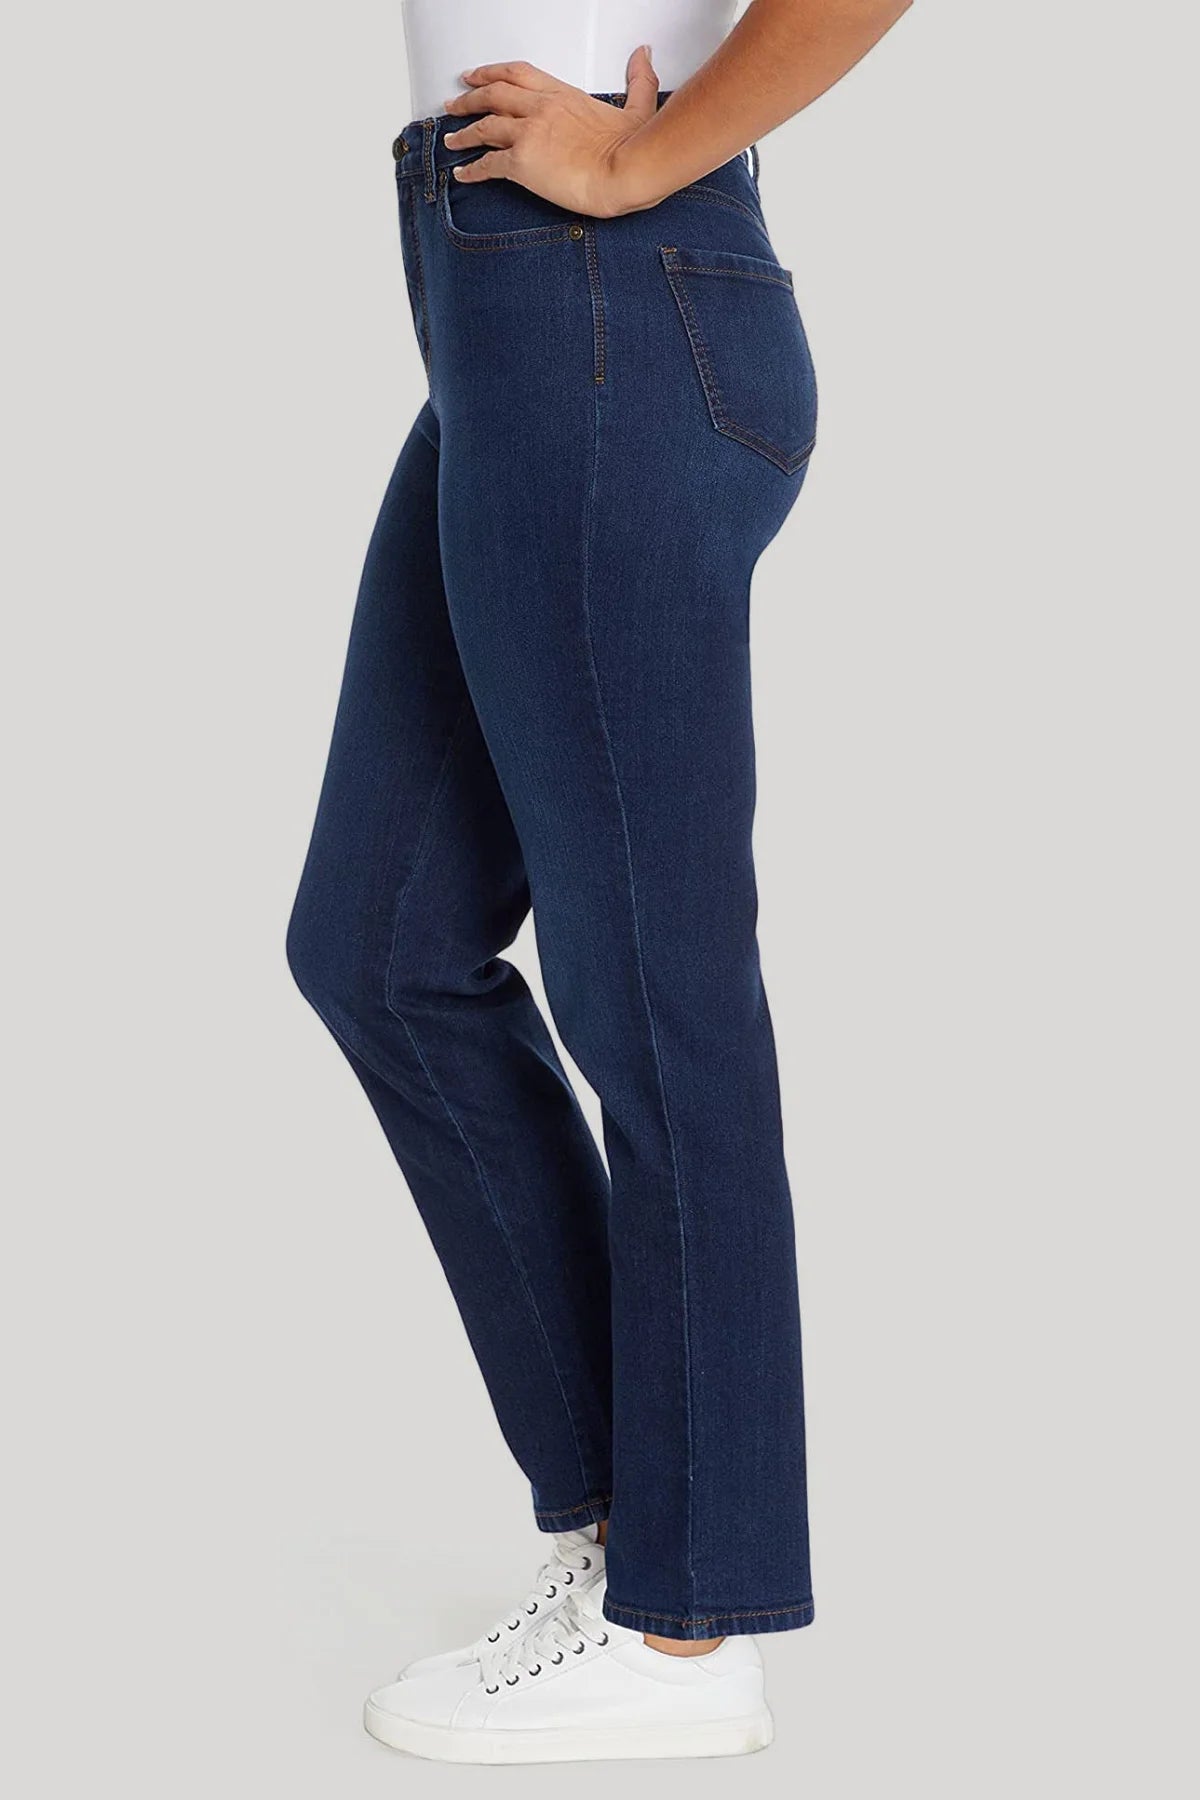 Gloria Vanderbilt Stretch Mid/High Rise ’Amanda’ Jeans